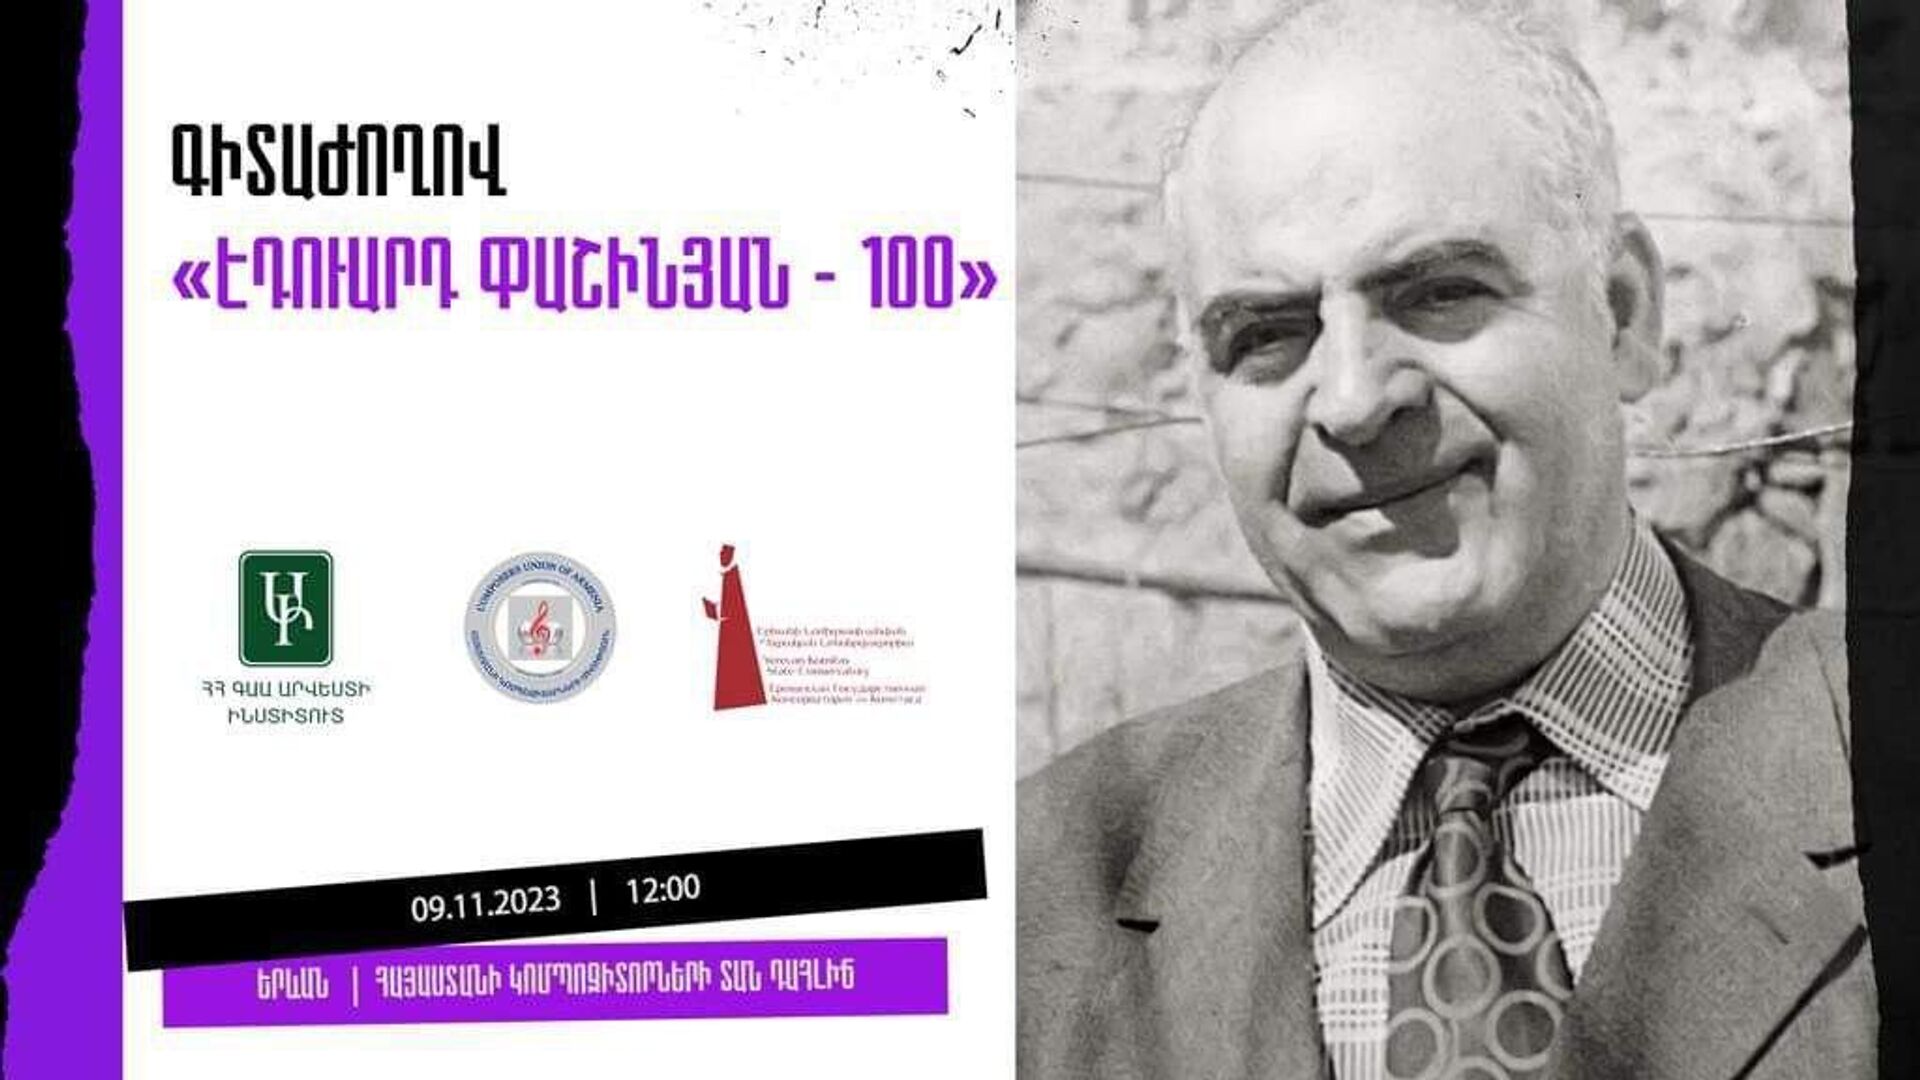 В Ереване пройдет научная конференция на тему Эдуард Пашинян - 100 - Sputnik Արմենիա, 1920, 07.11.2023